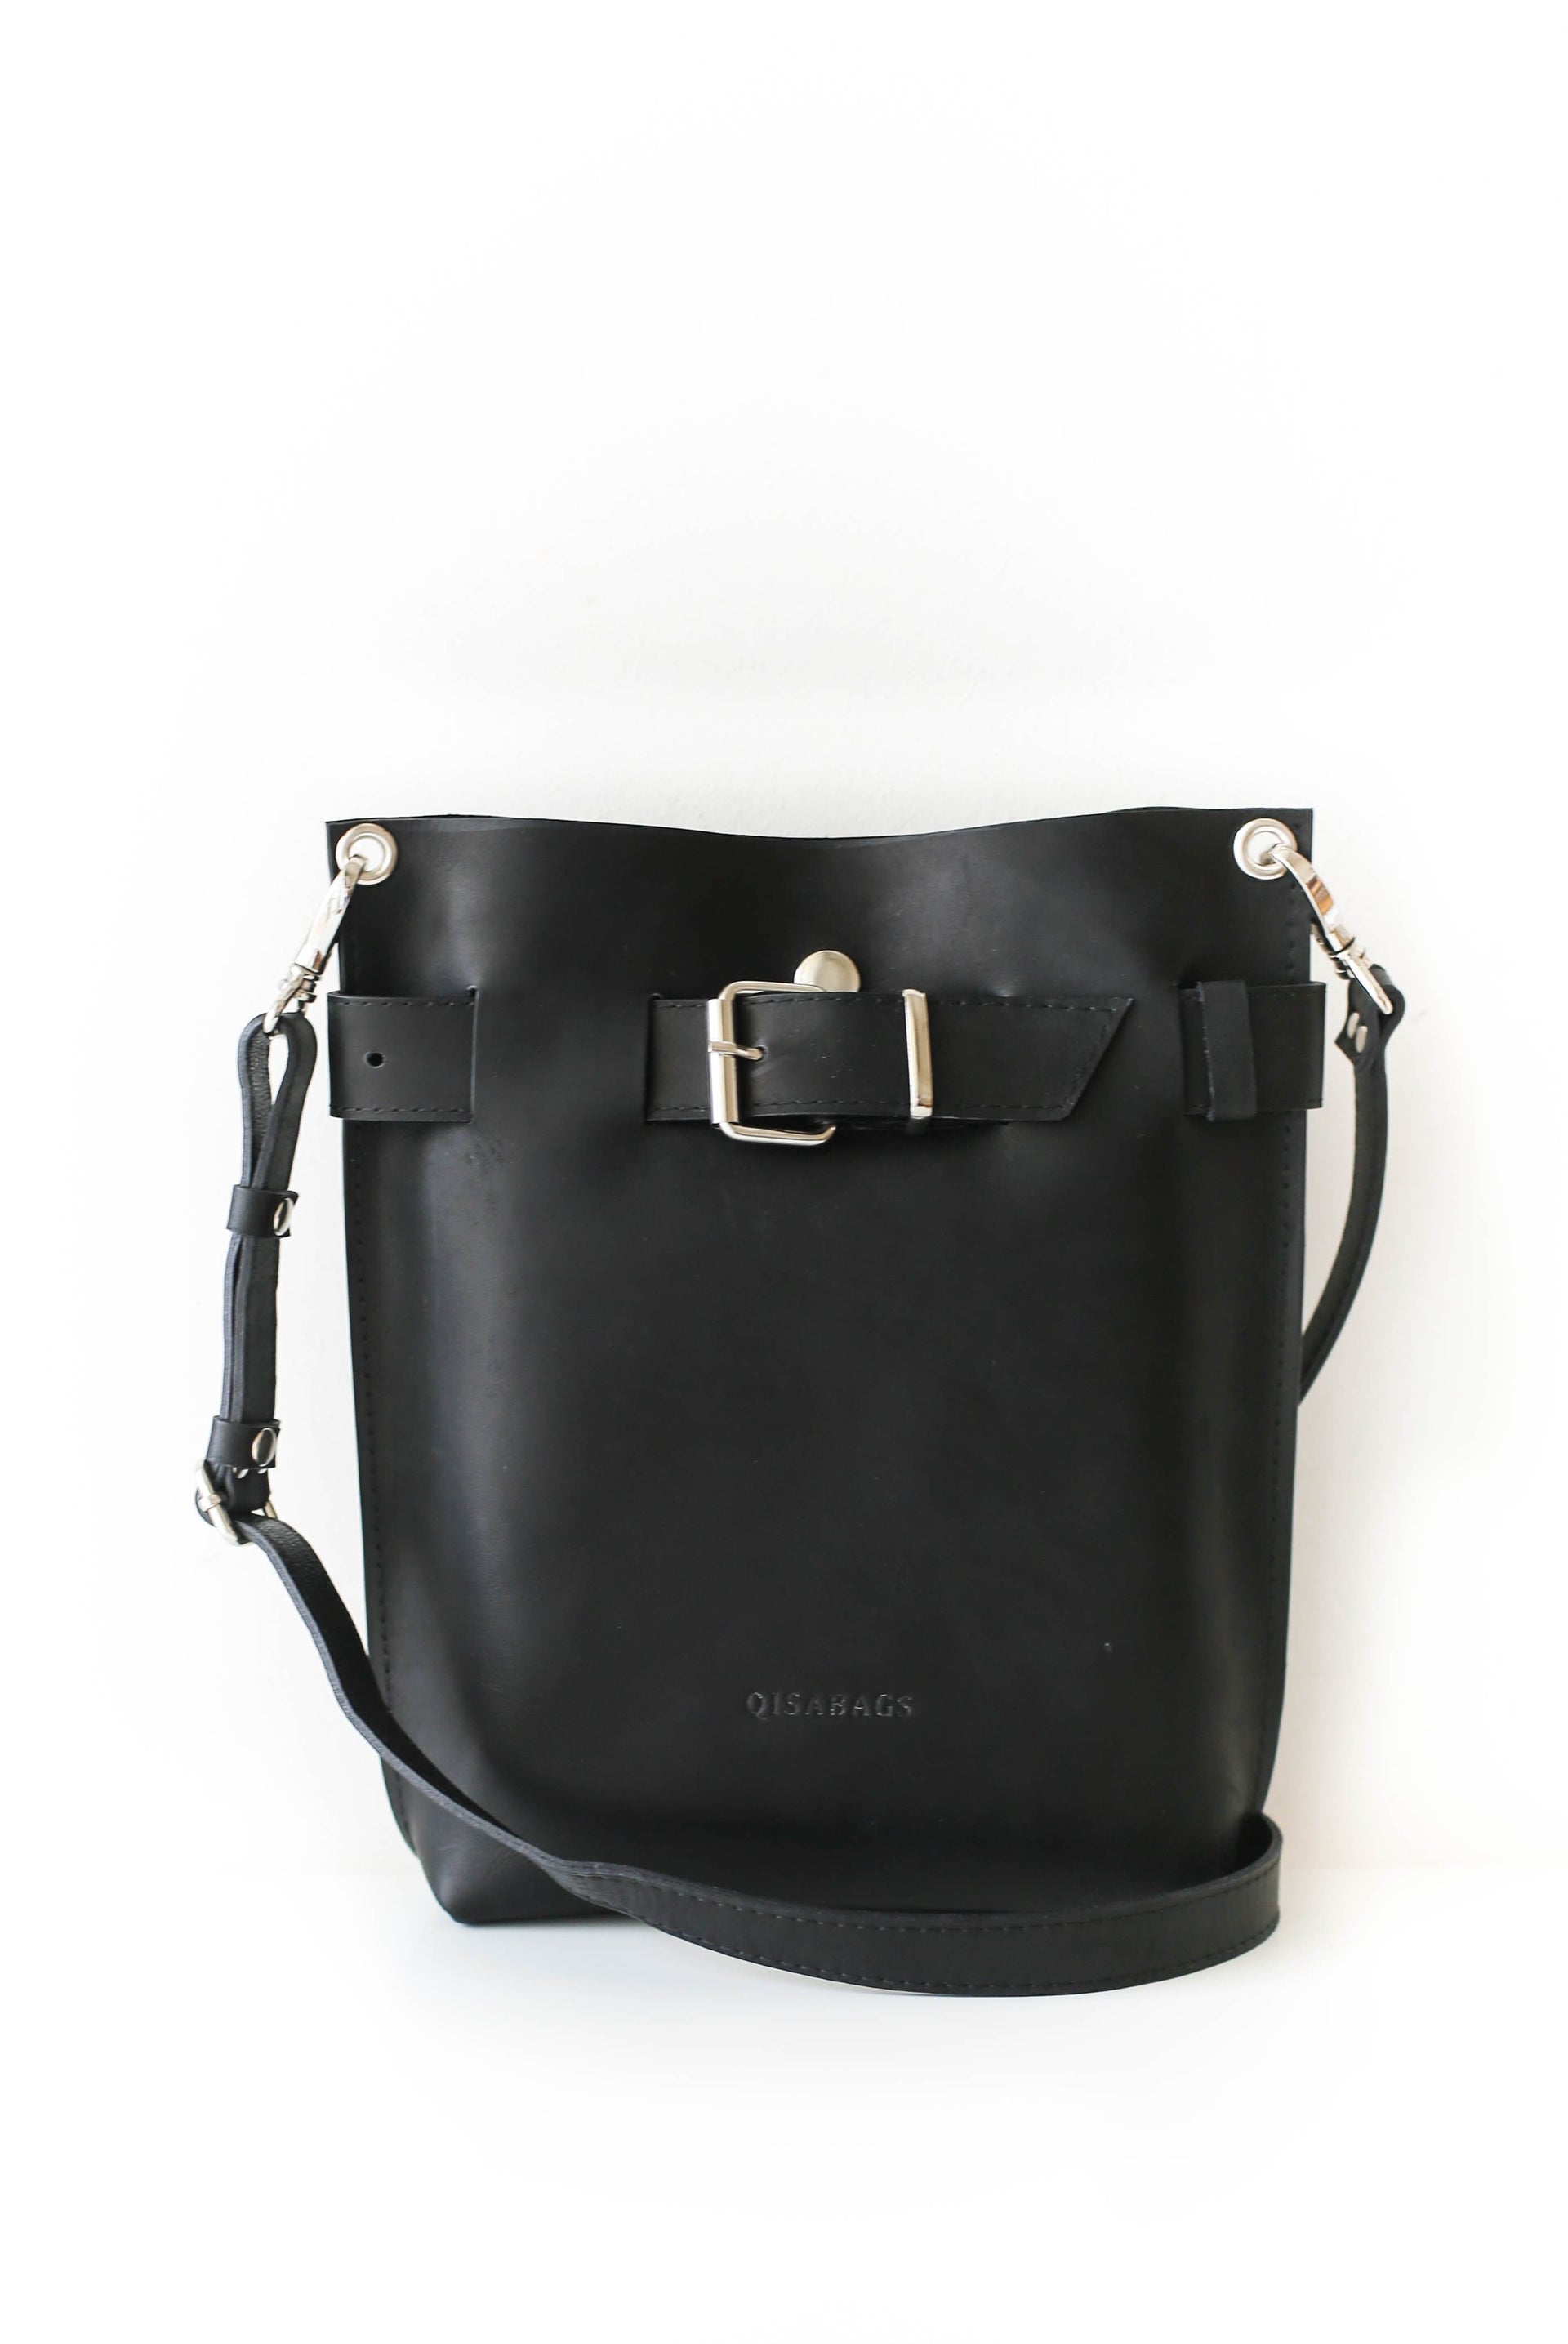 Small black leather purse